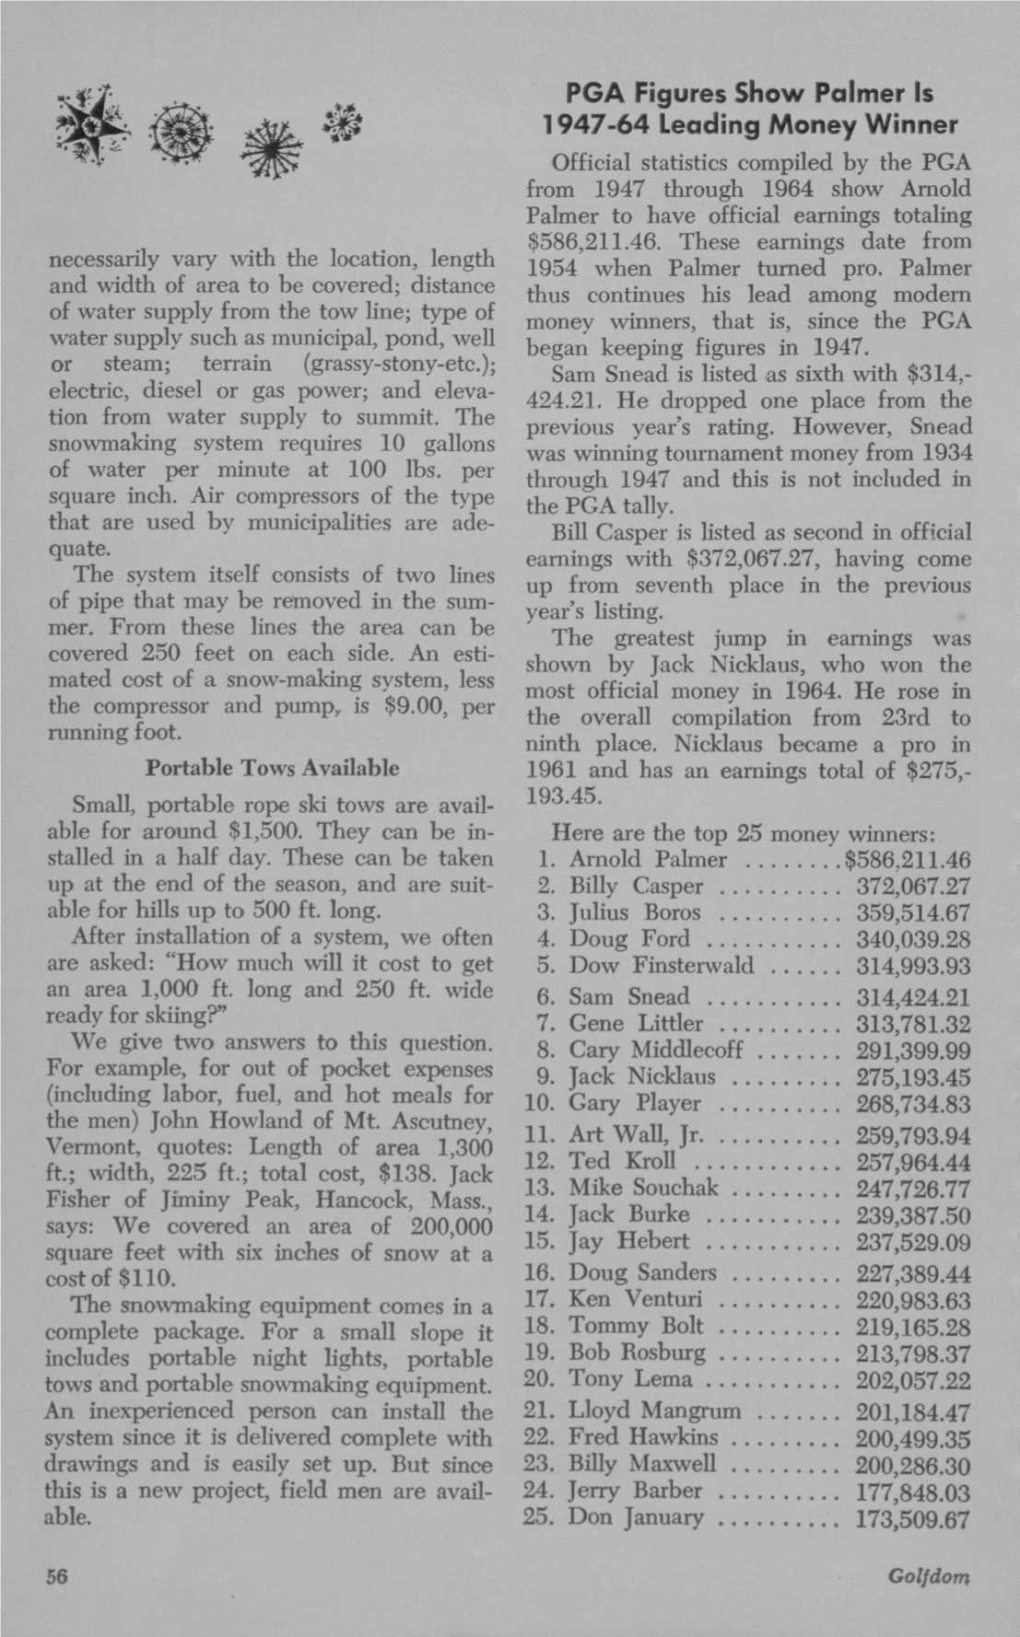 PGA Figures Show Palmer Is 1947-64 Leading Money Winner